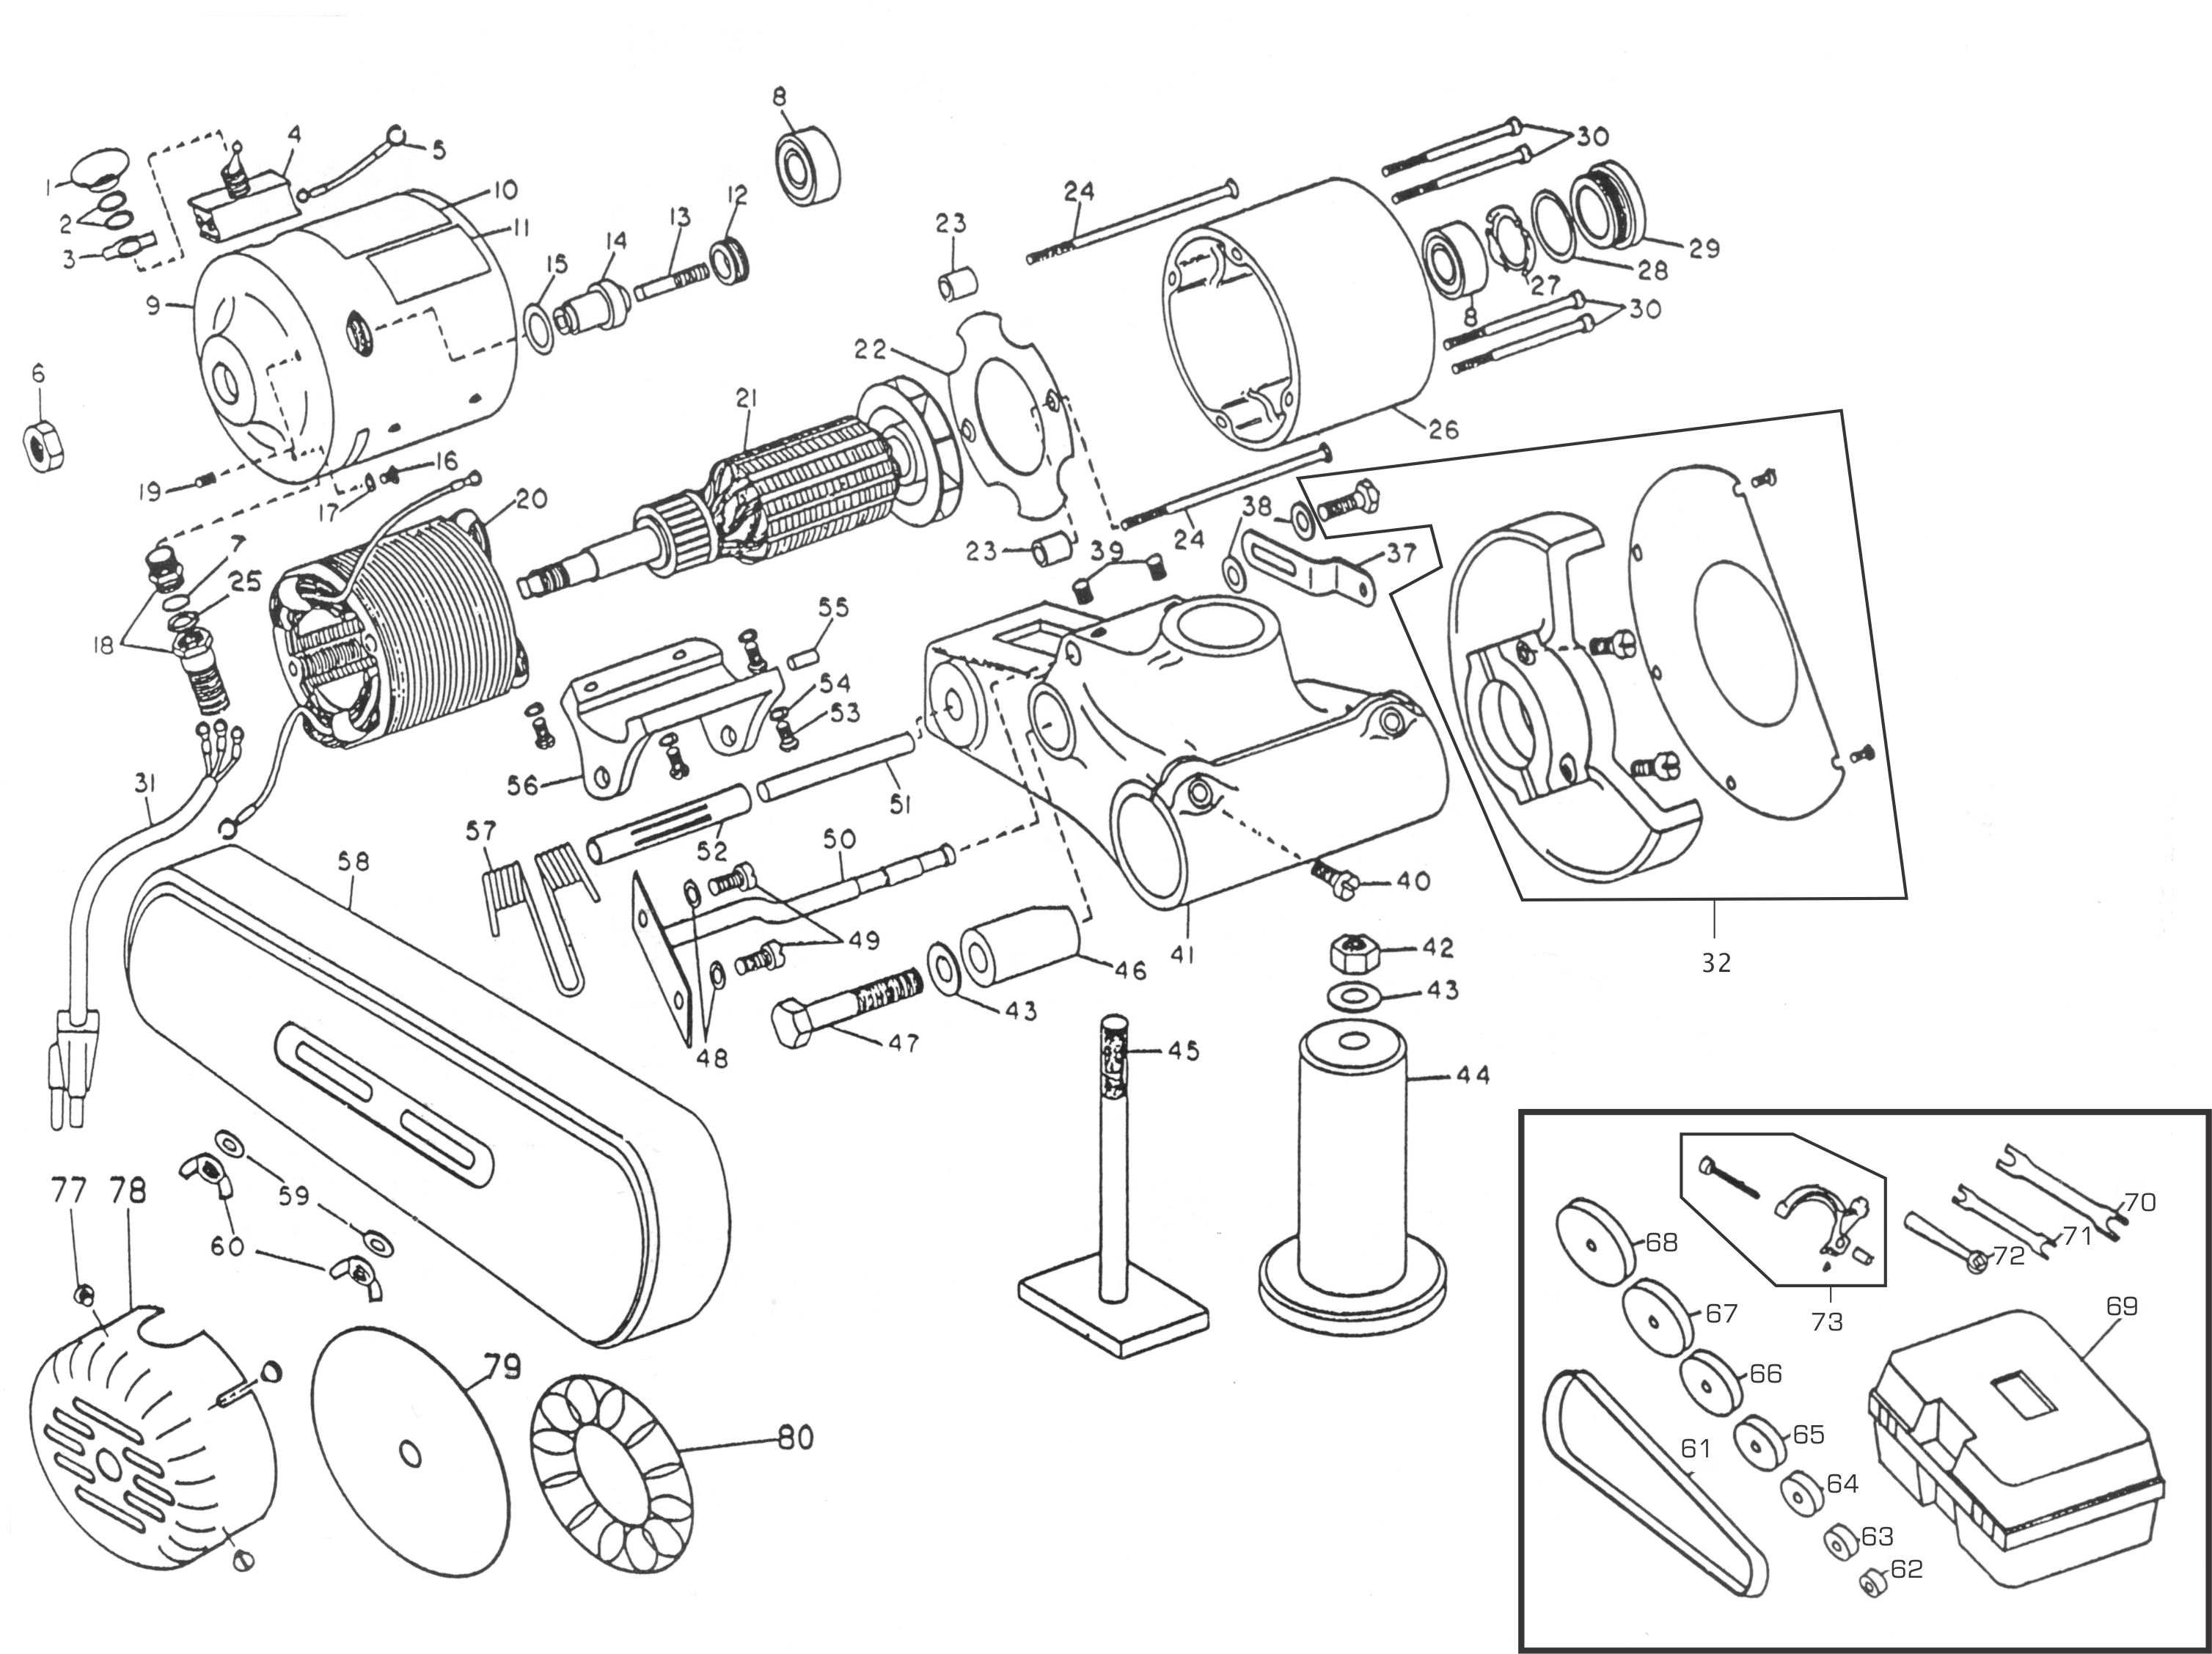 Tool Post Grinder Replacement Parts | Dumore Series 57 Tool Post Grinder